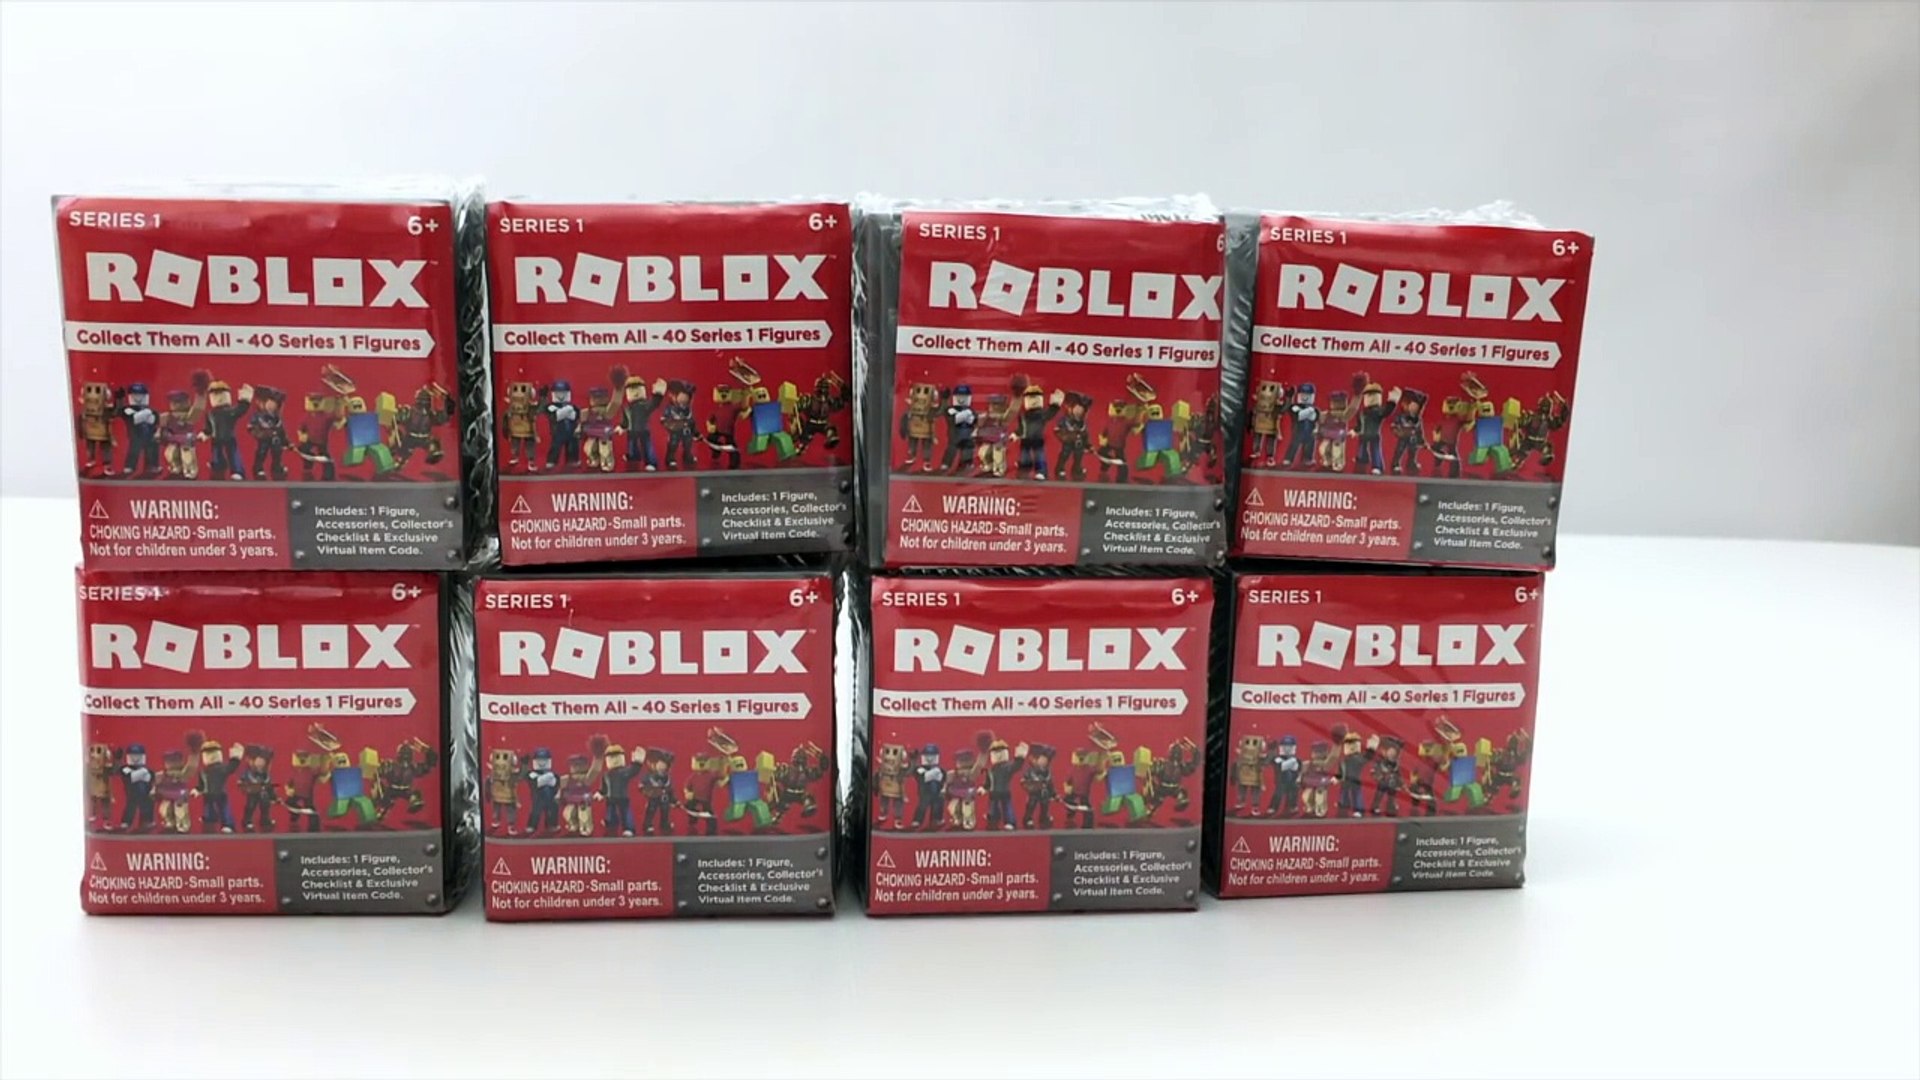 Roblox Toys Surprise Blind Boxes Unboxing Toy Review - roblox series 2 blind figure boxes unboxing and big announcement